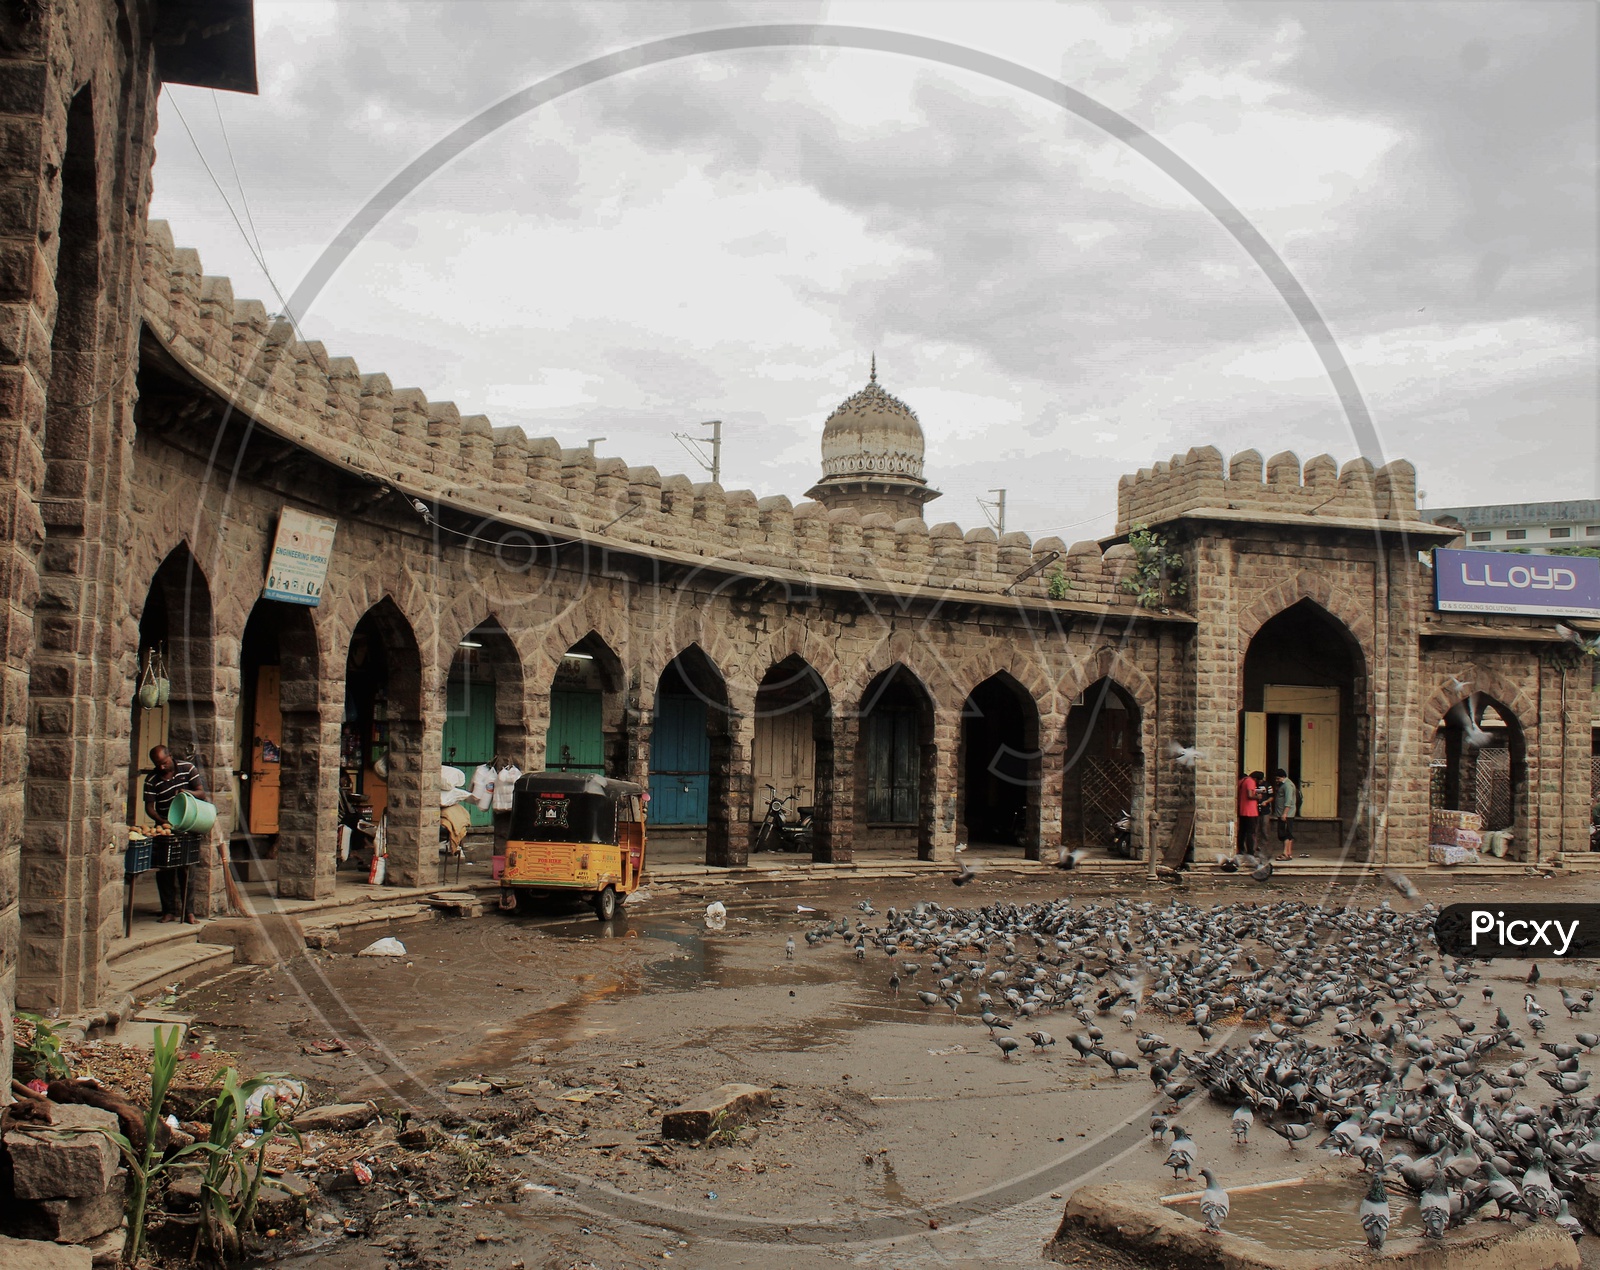 Mozamjahi Market With Pigeons Flock